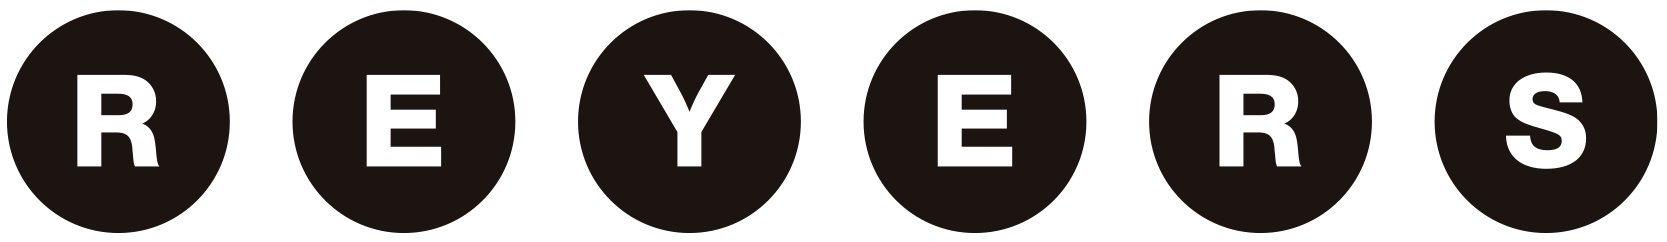 Reyers logo